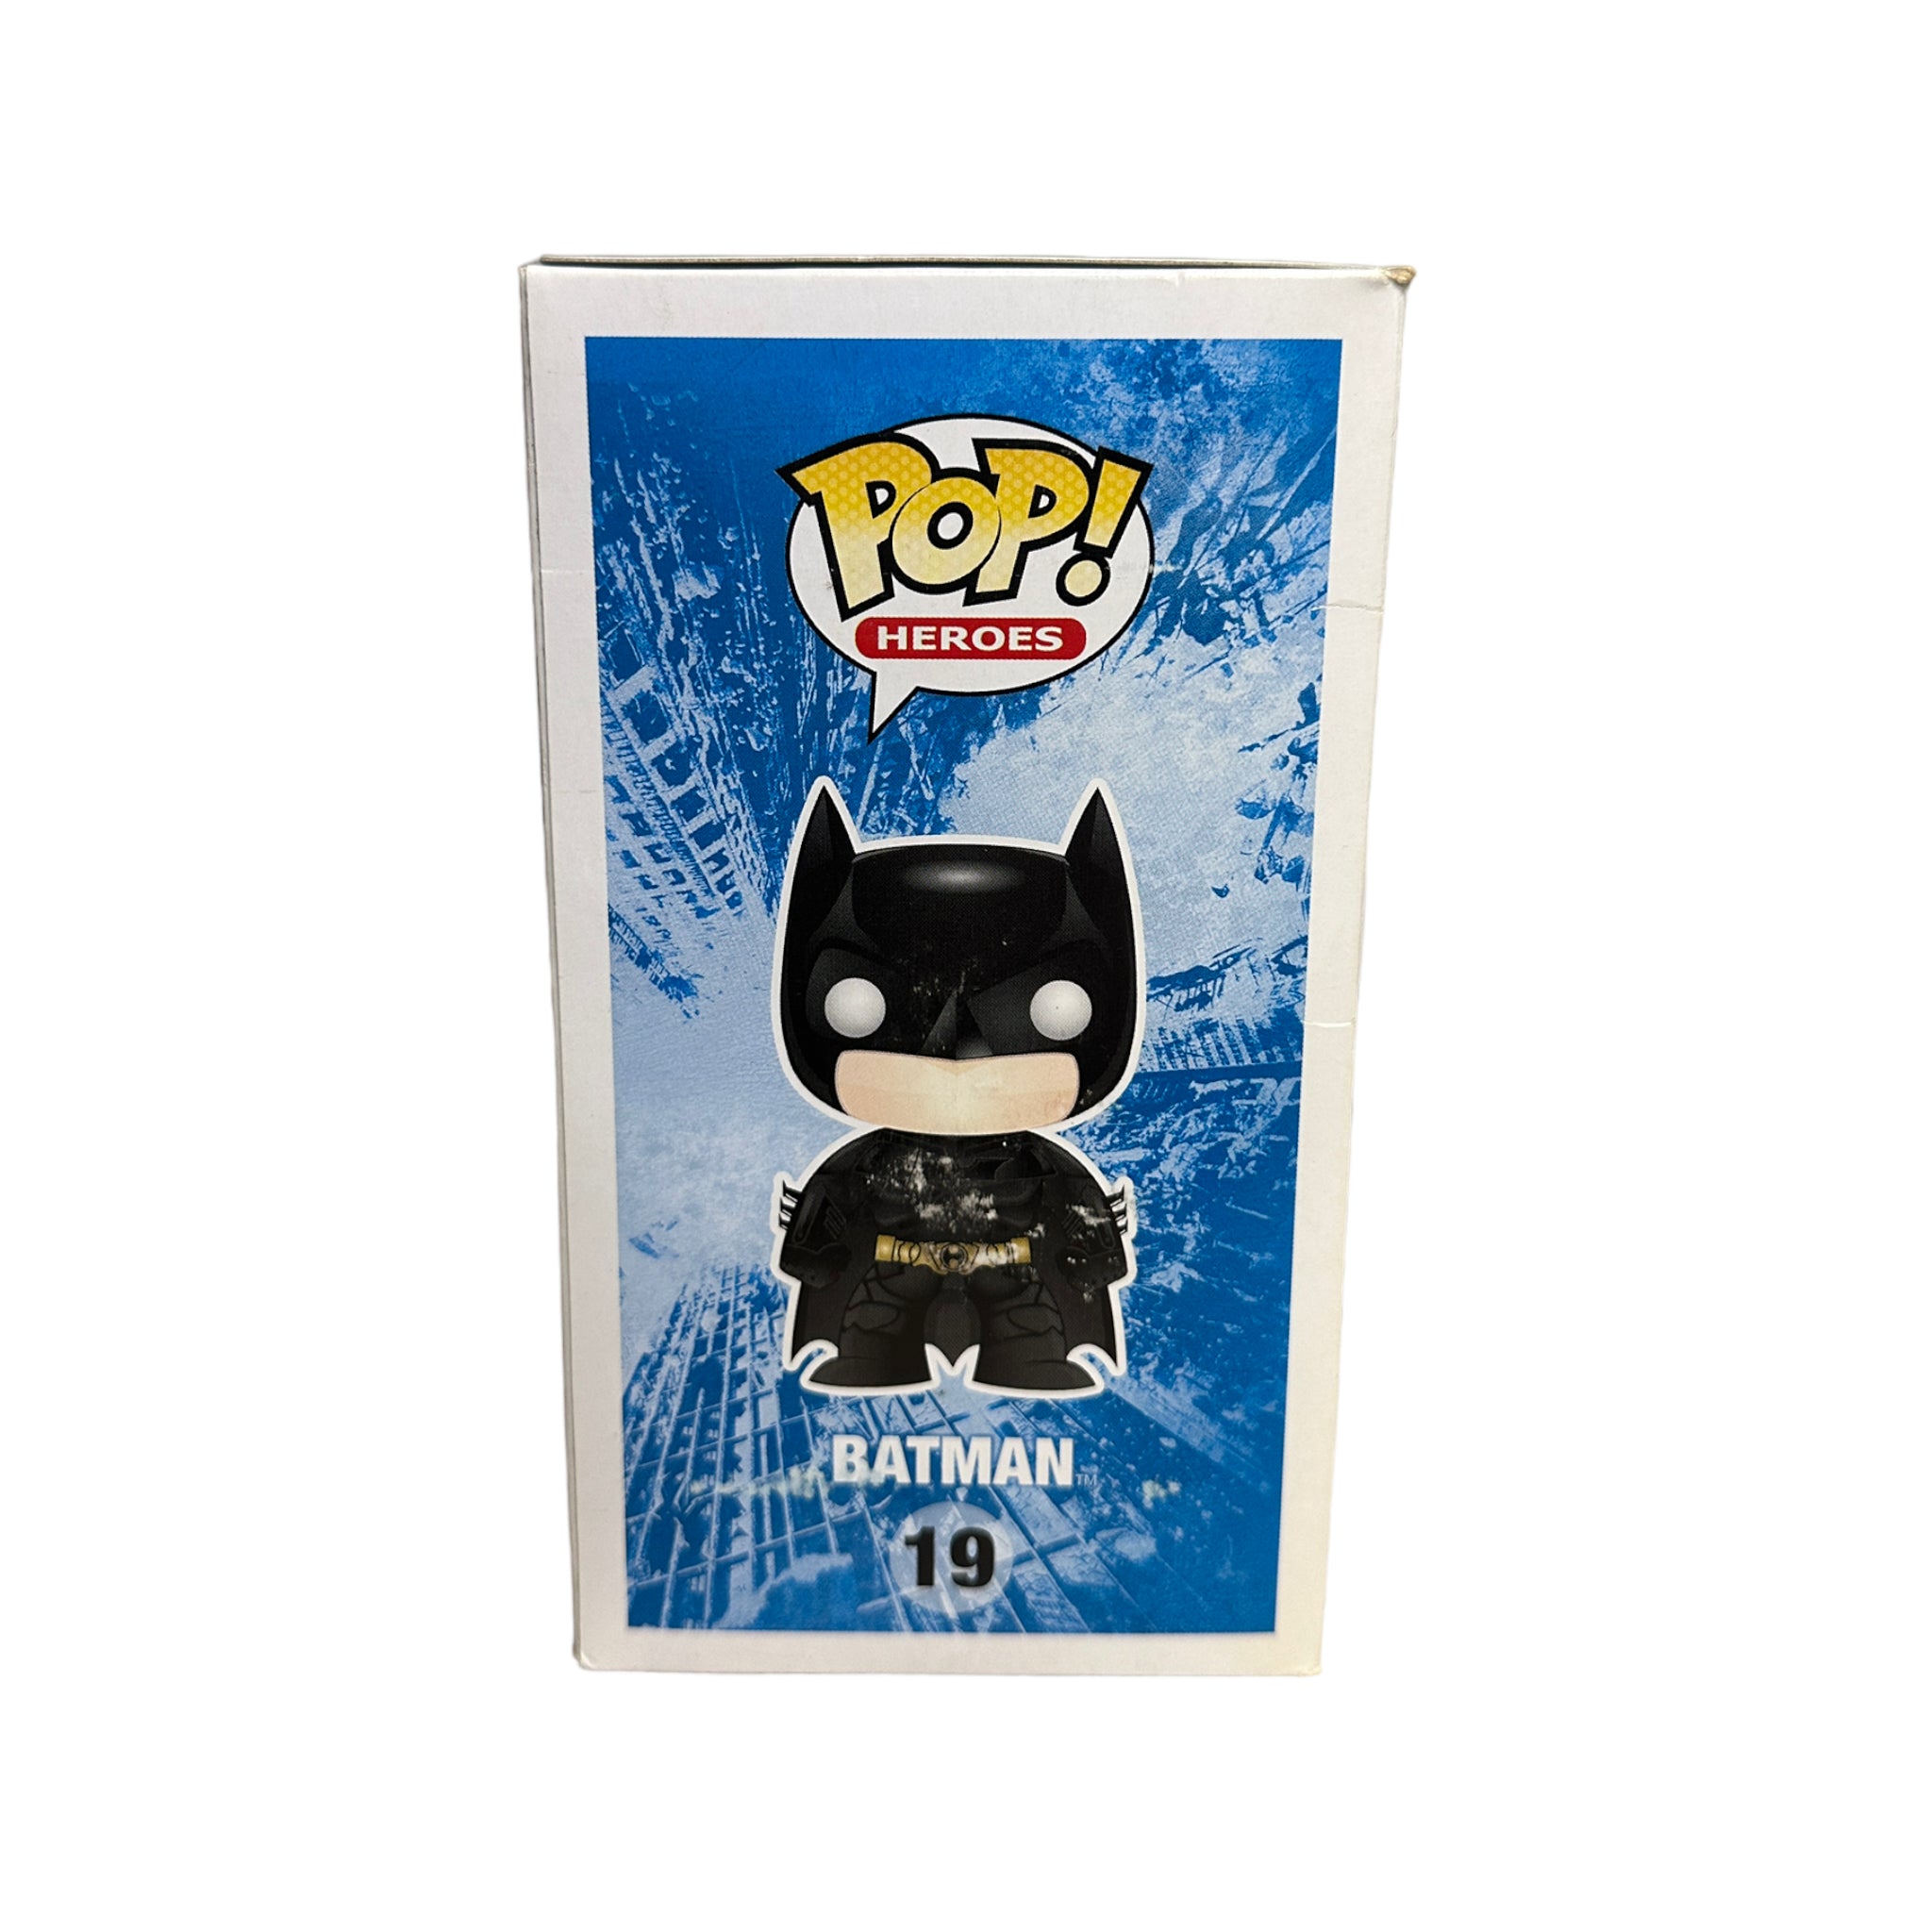 Batman #19 (Patina) Funko Pop! - The Dark Knight Rises - SDCC 2012 Exclusive LE480 Pcs - Condition 6/10